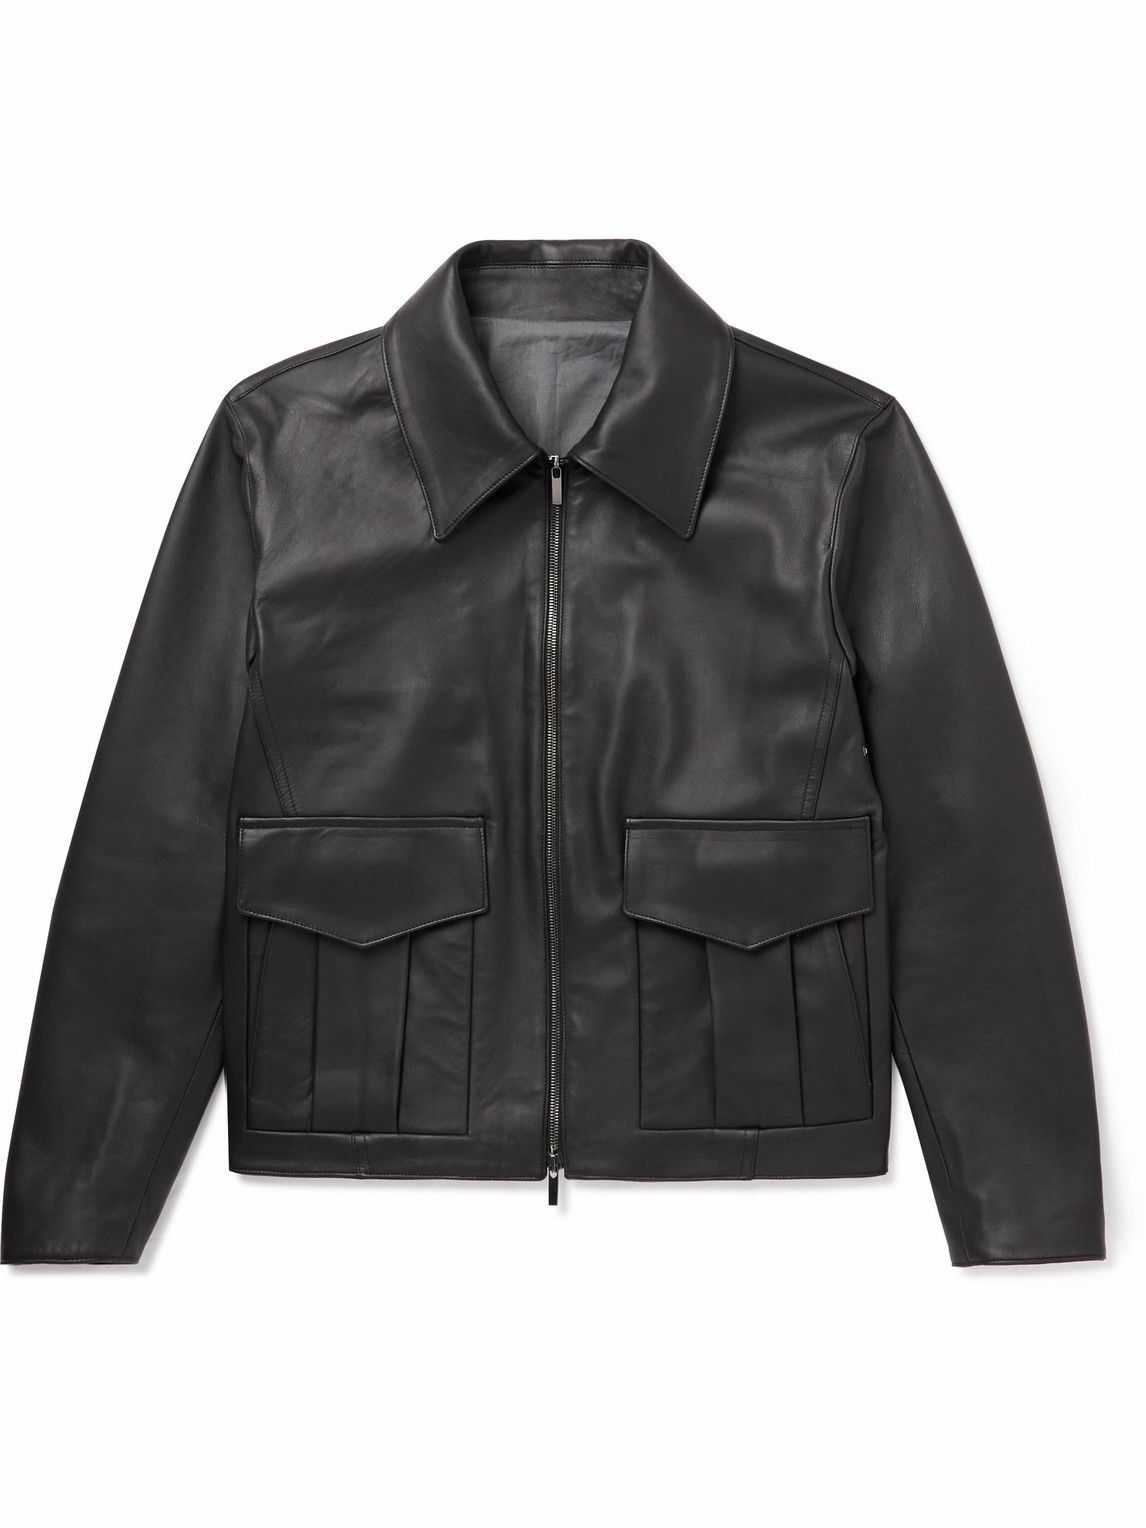 Stoffa - Throwing Fits Leather Flight Jacket - Black